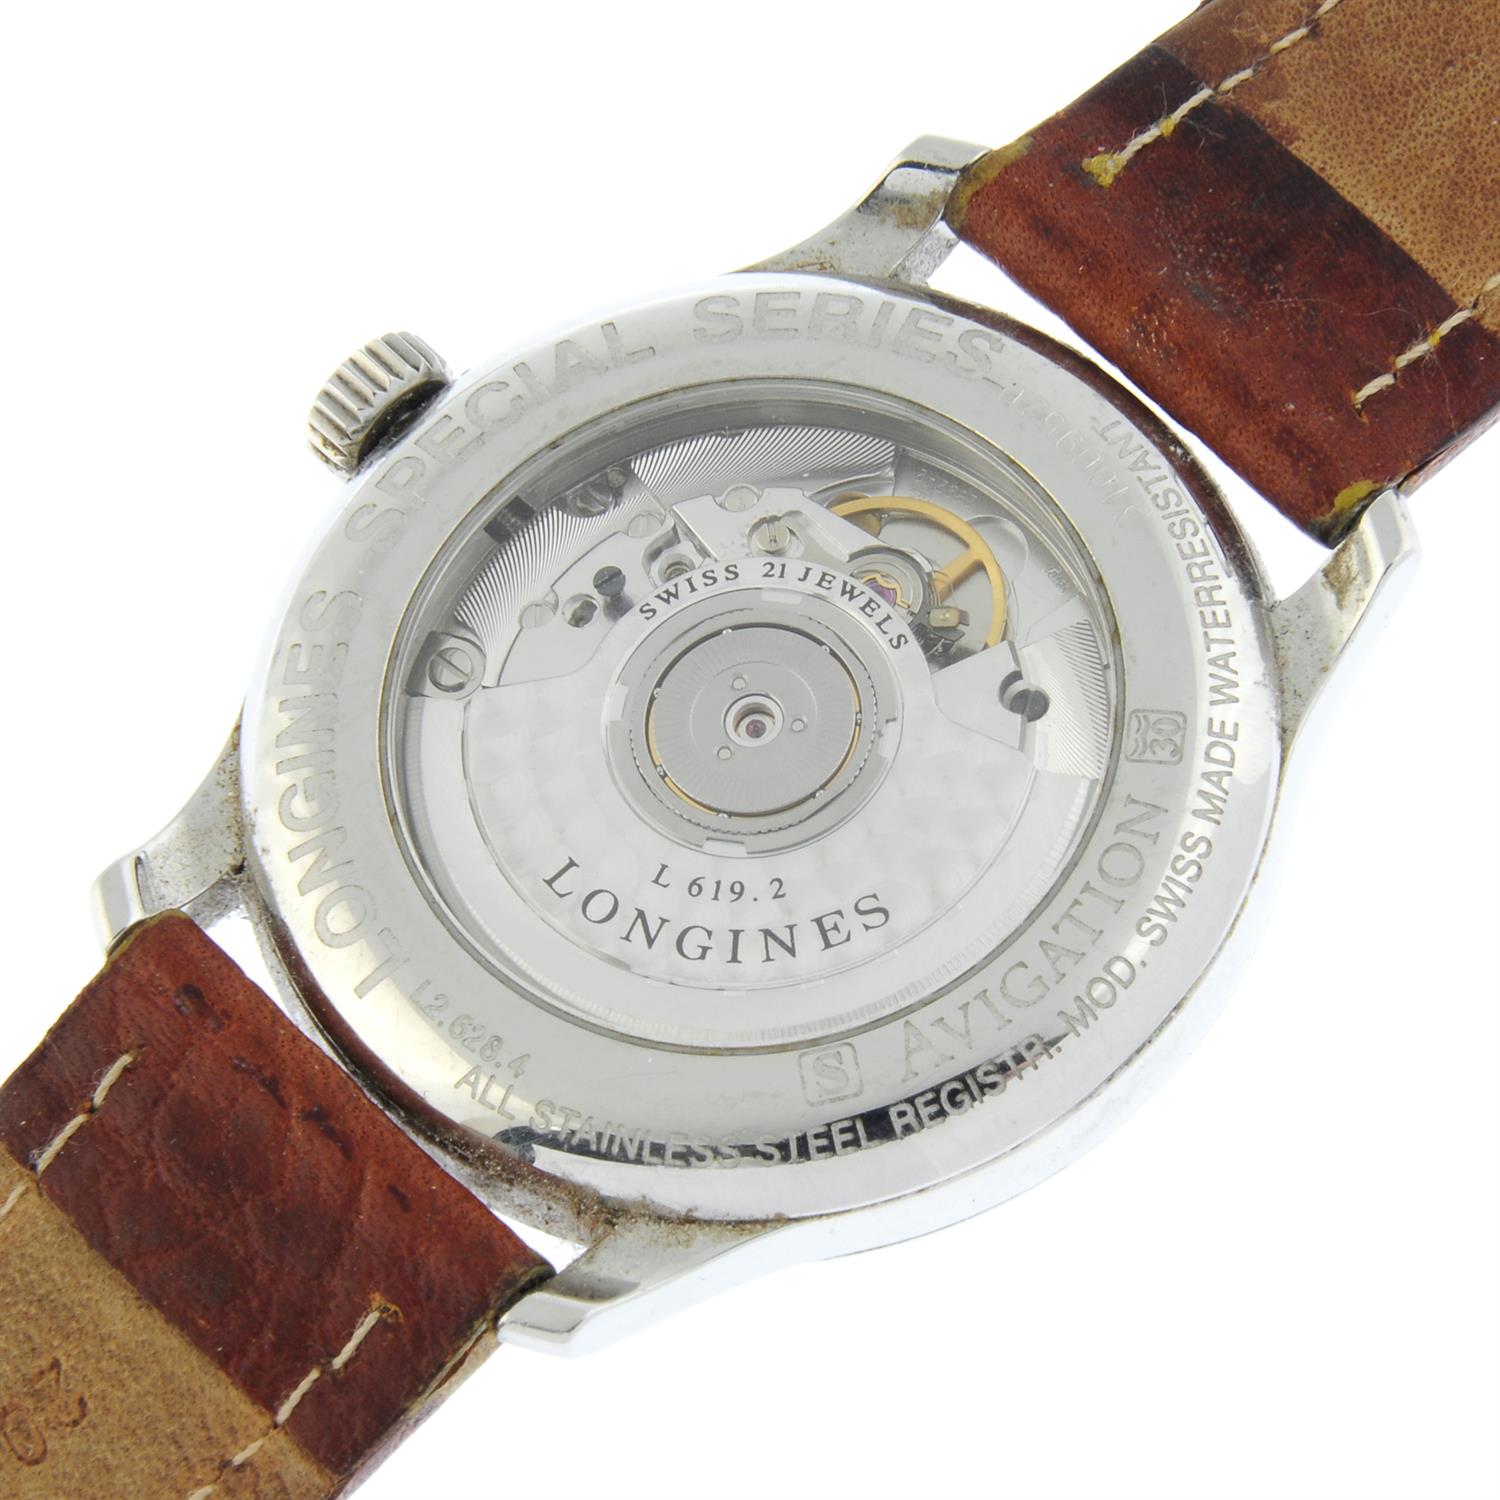 Longines - an Avigation watch, 38mm. - Image 4 of 5